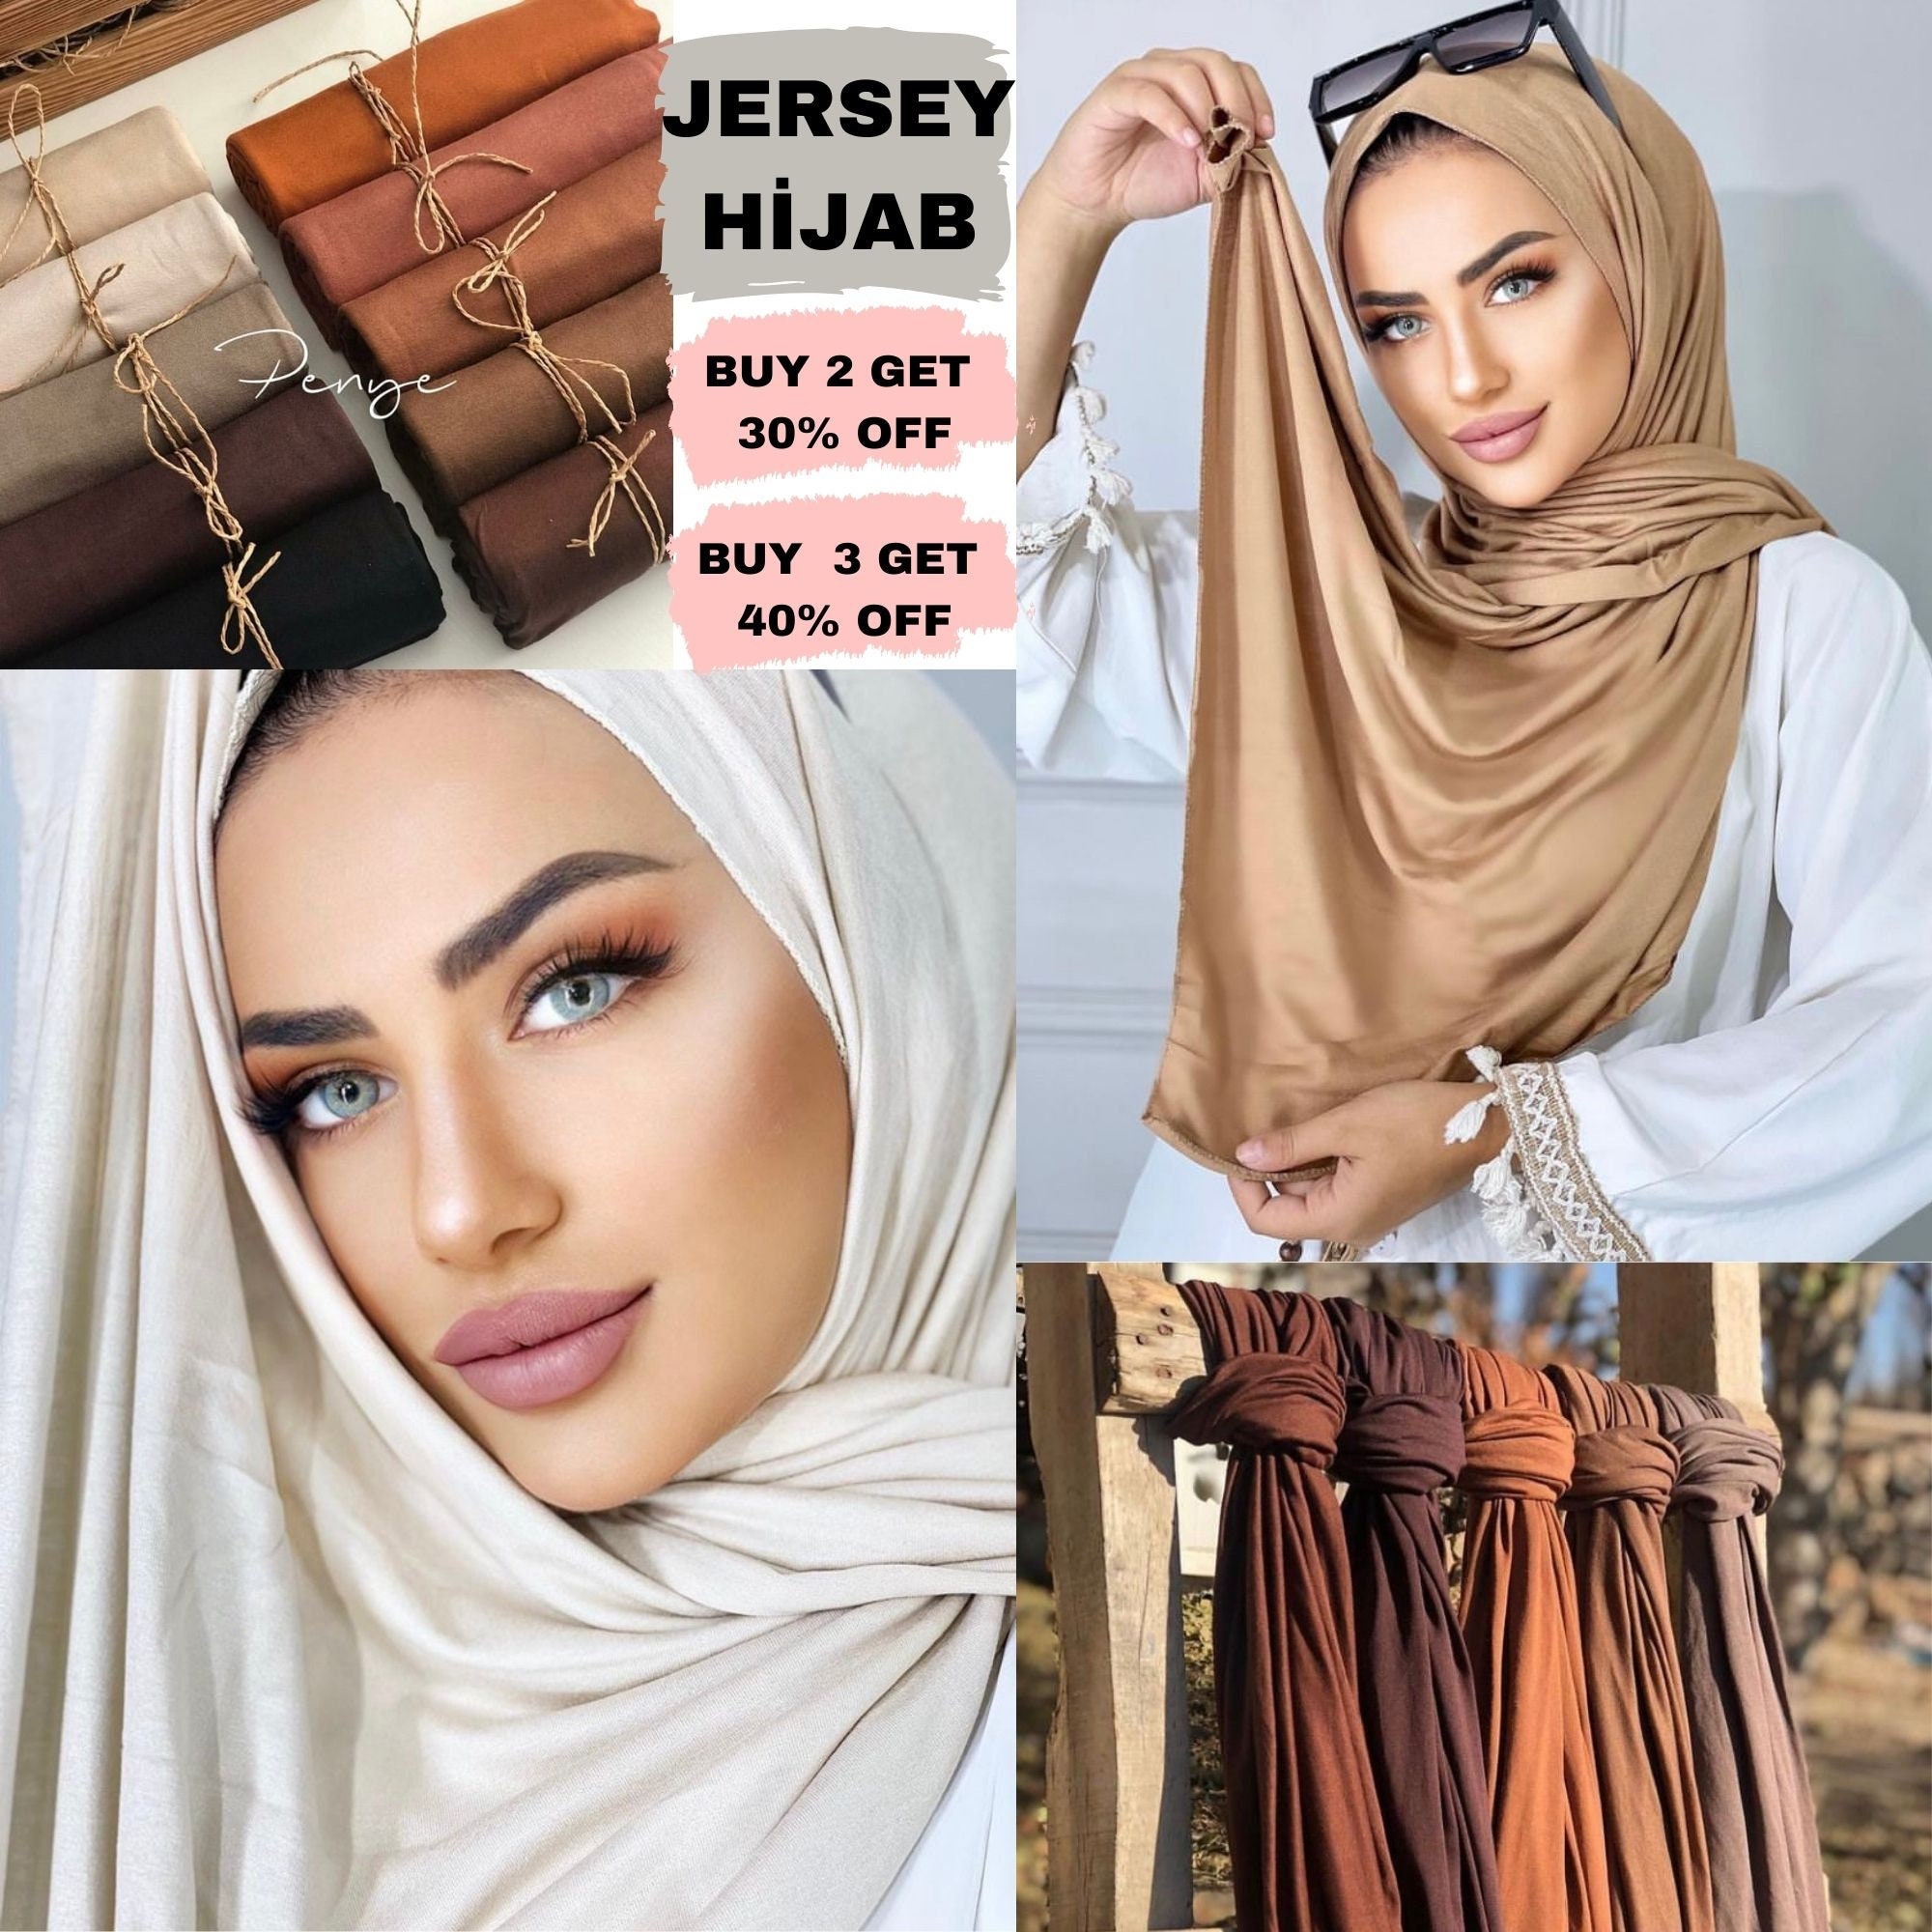 Handepo 20 Pcs Adjustable Hijab Undercap Muslim Inner Hijab Cap Islamic Hijab for Women Solid Color Hijab Underscarf Cotton Non Slip Bonnet Cover